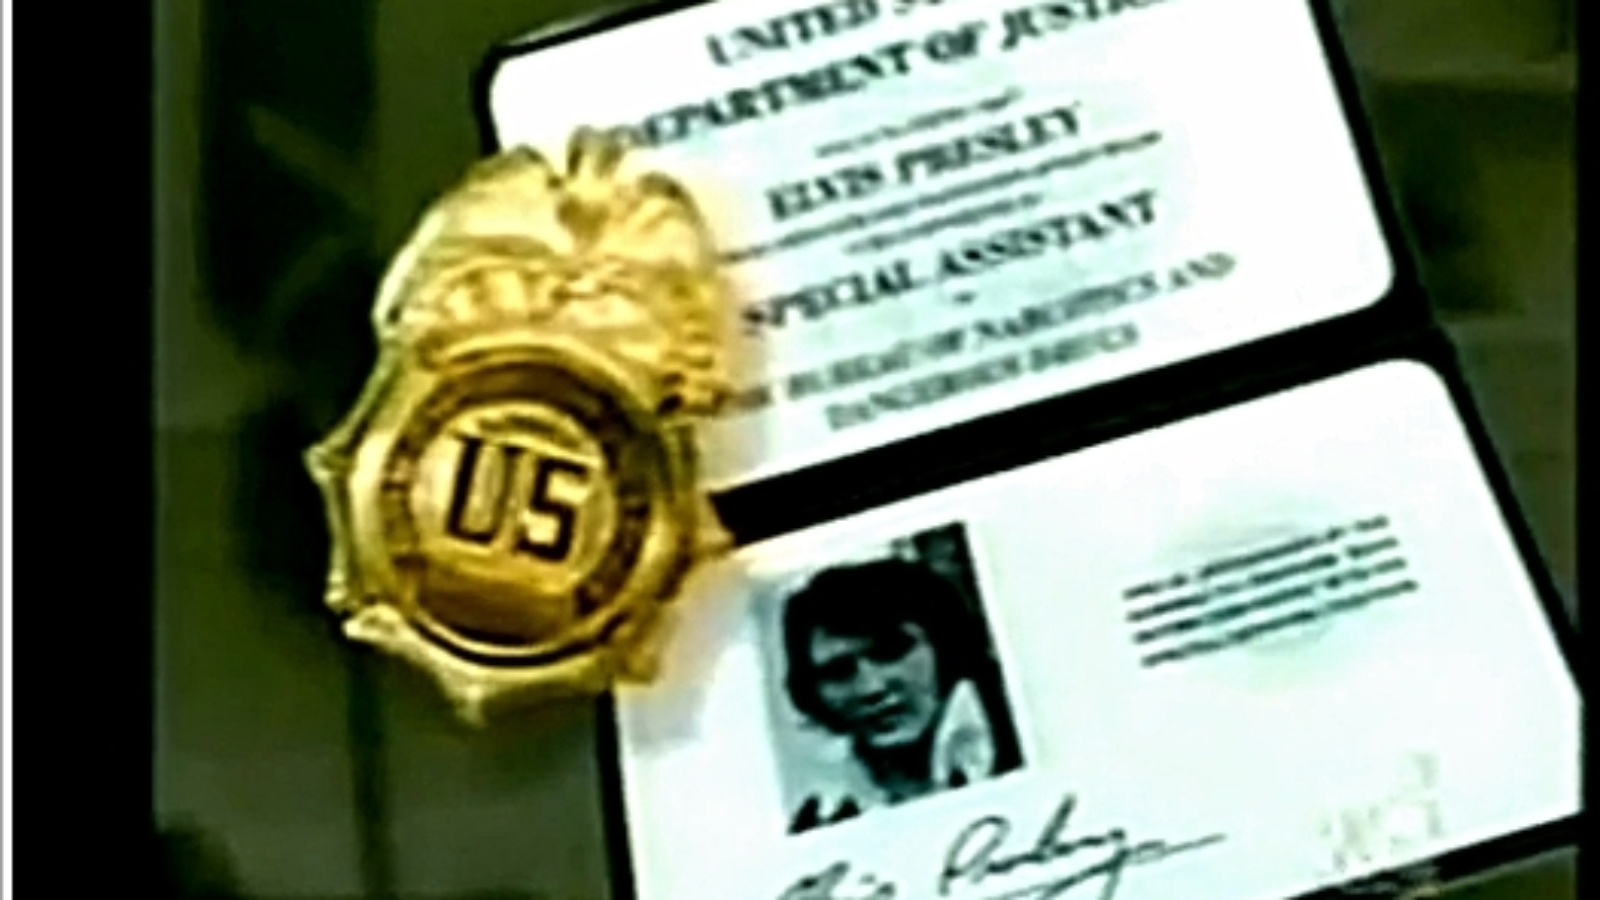 Elvis-Federal-credentials